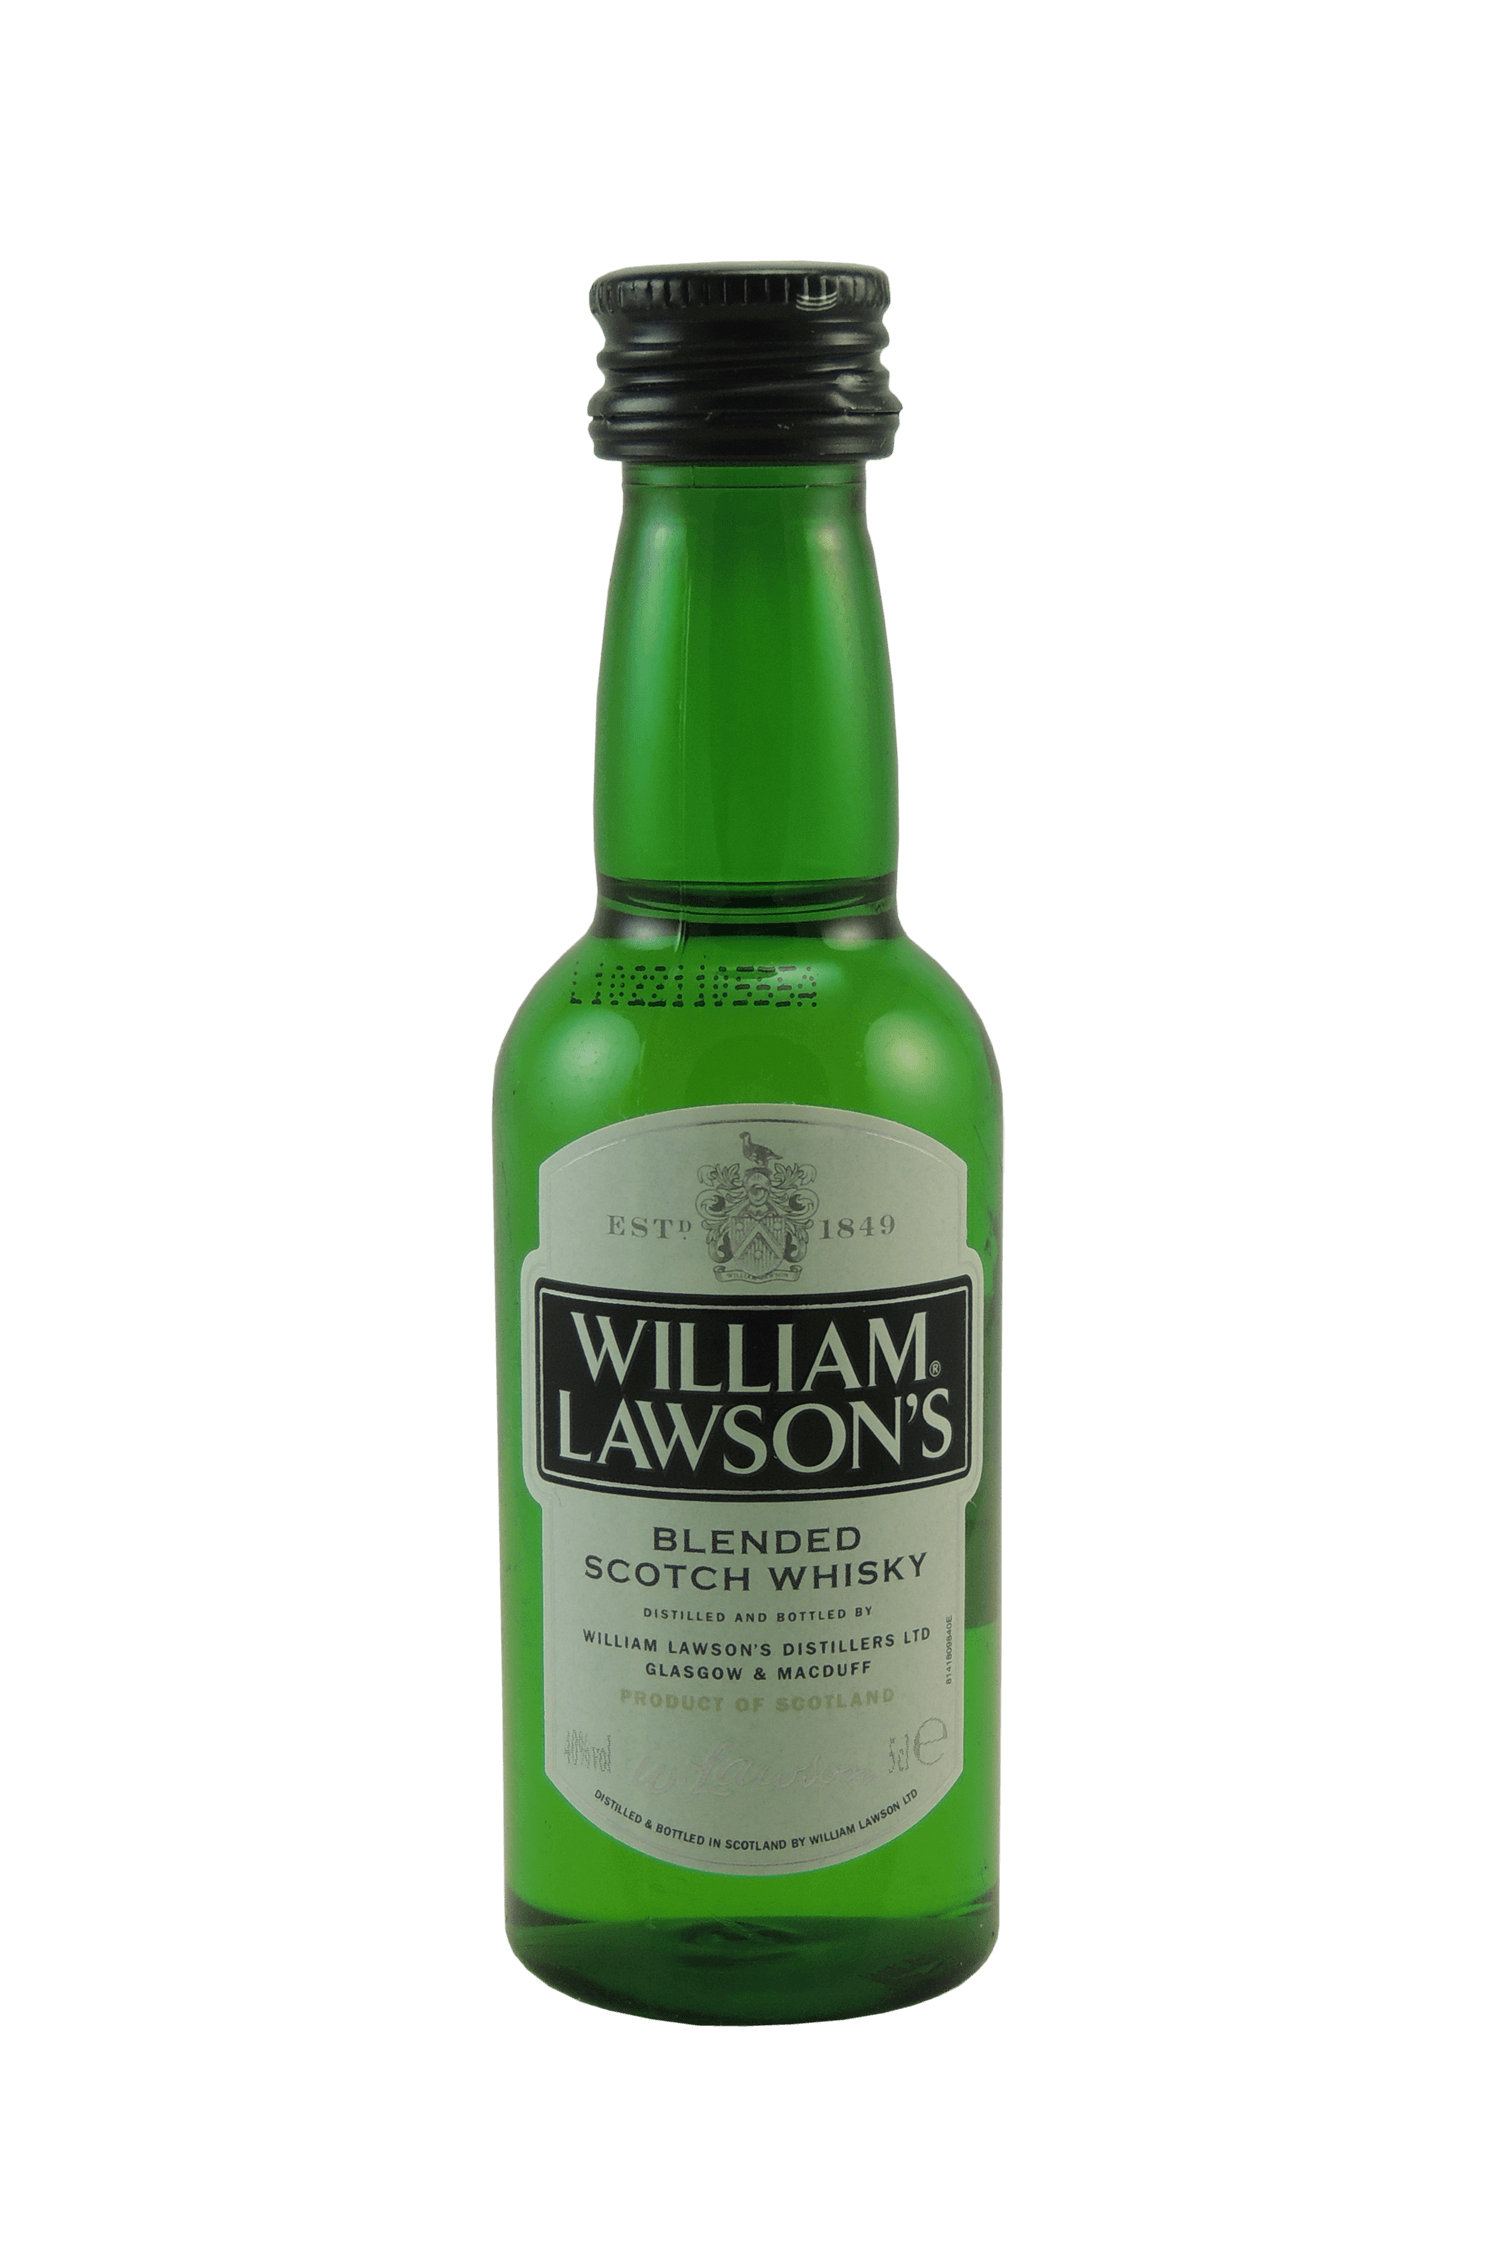 William Lawson’s Scotch Whisky